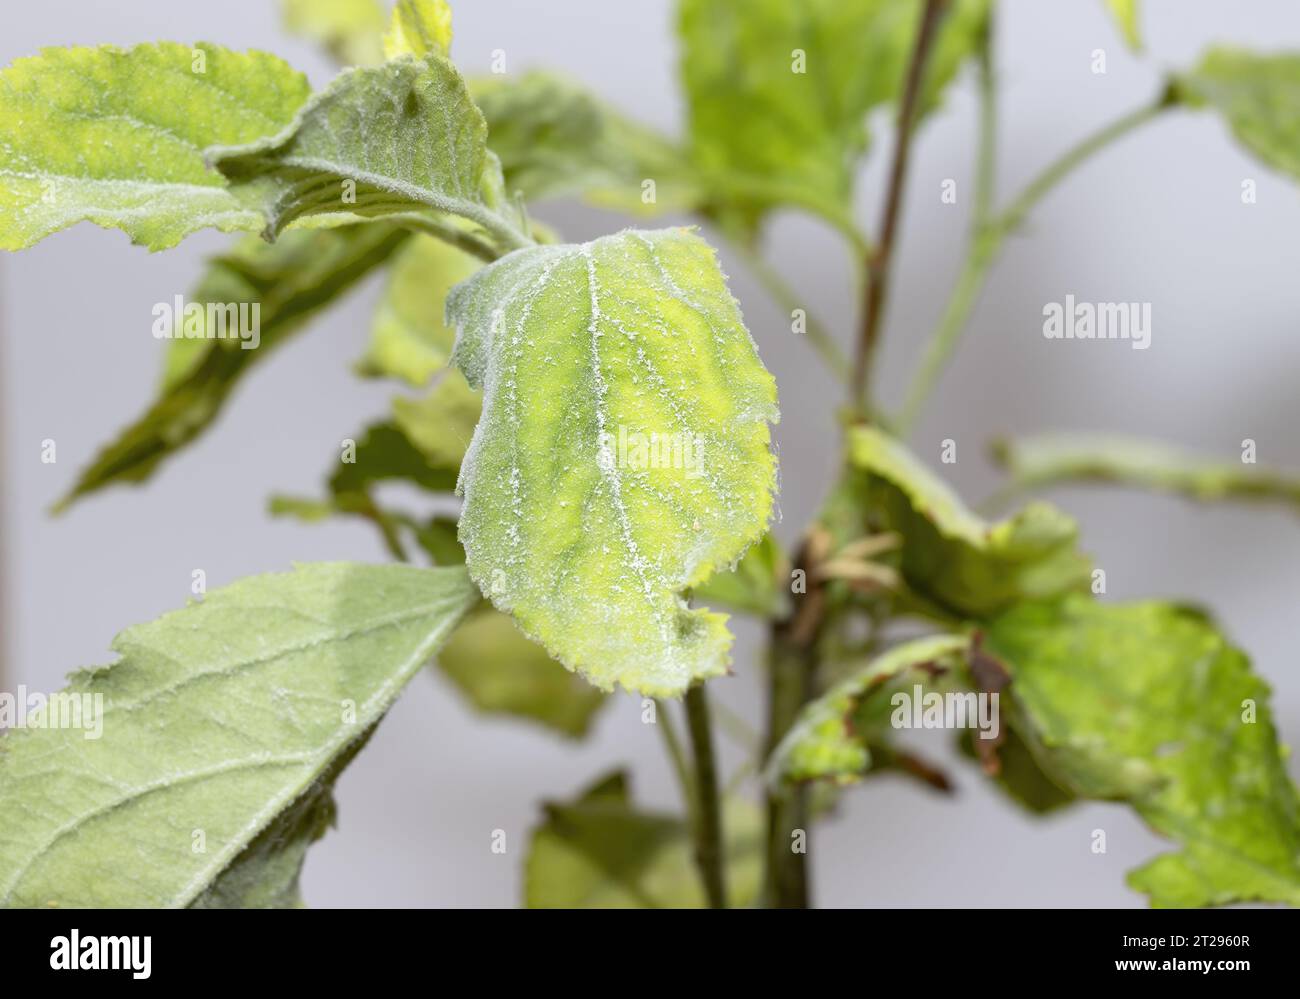 A leaf affected by the oidium fungus Stock Photo